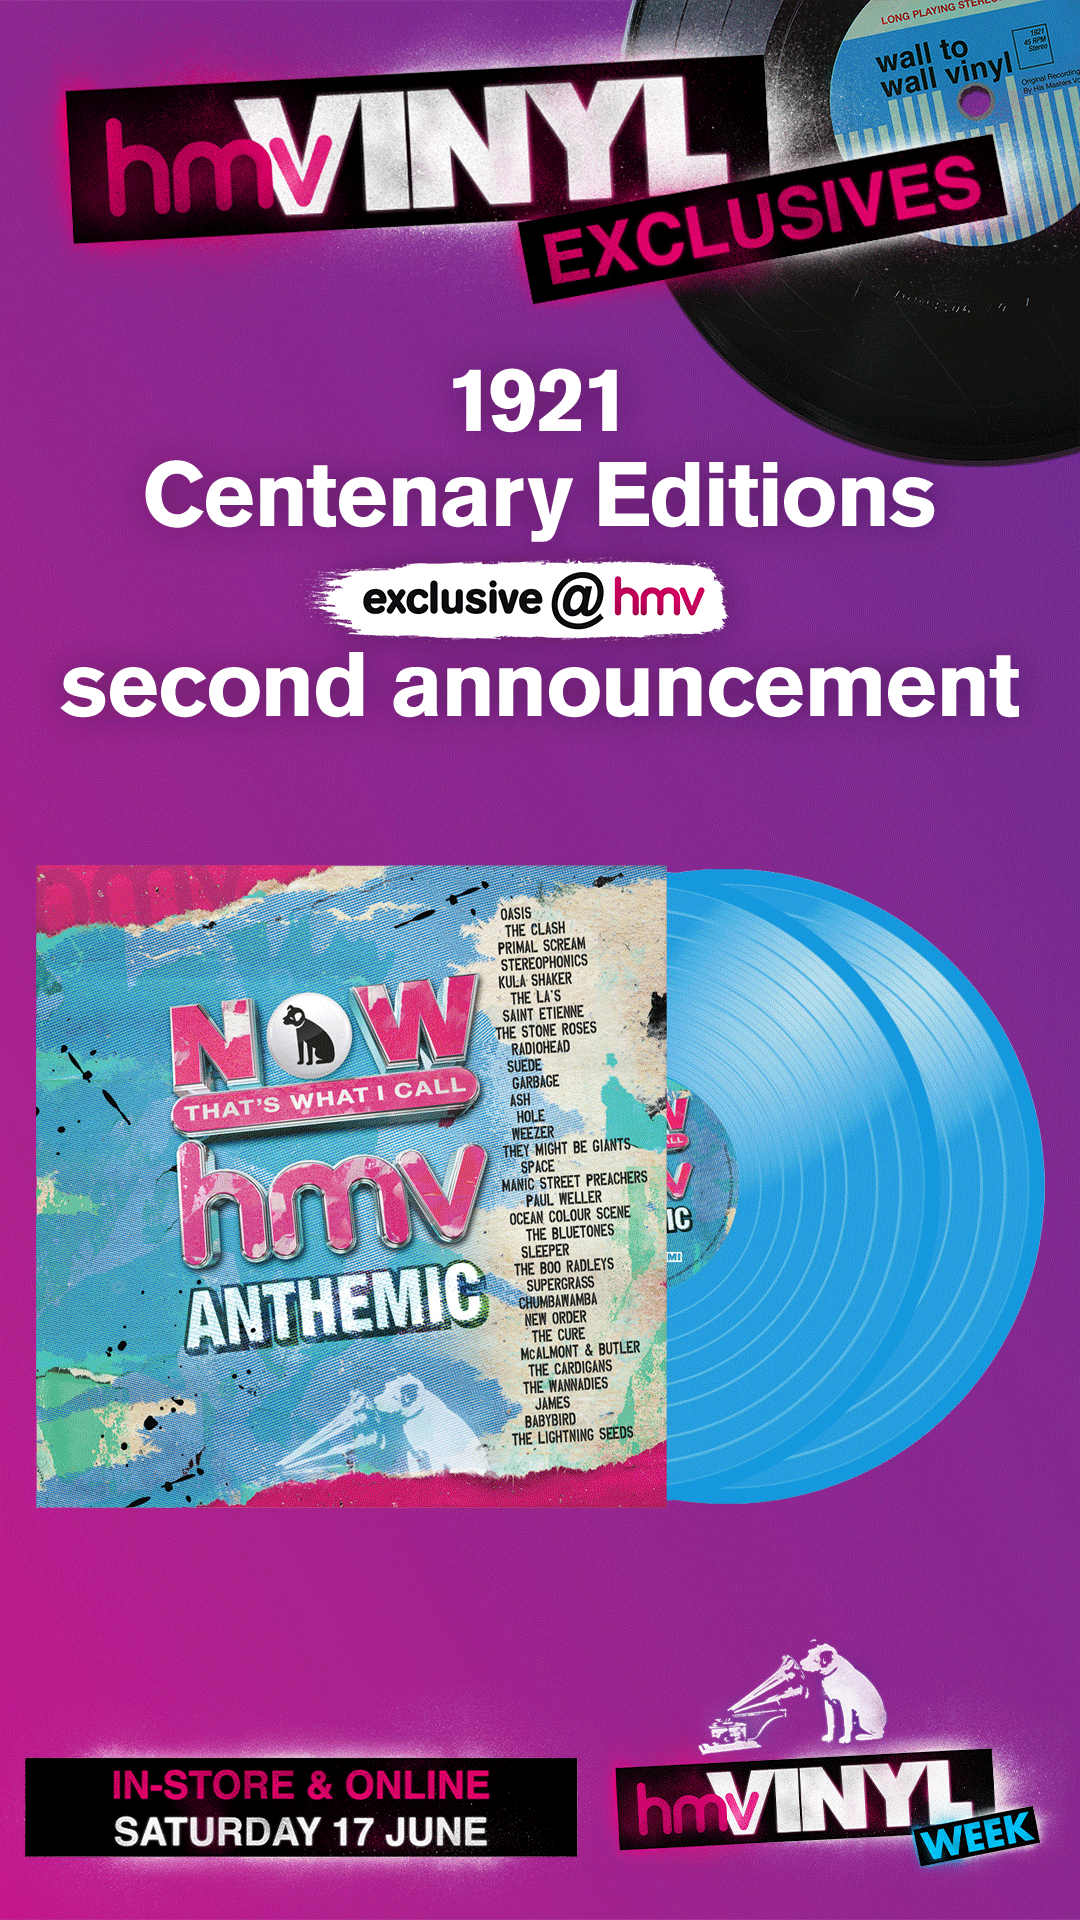 HMV reveal full line-up for their centenary vinyl 'Exclusives Day